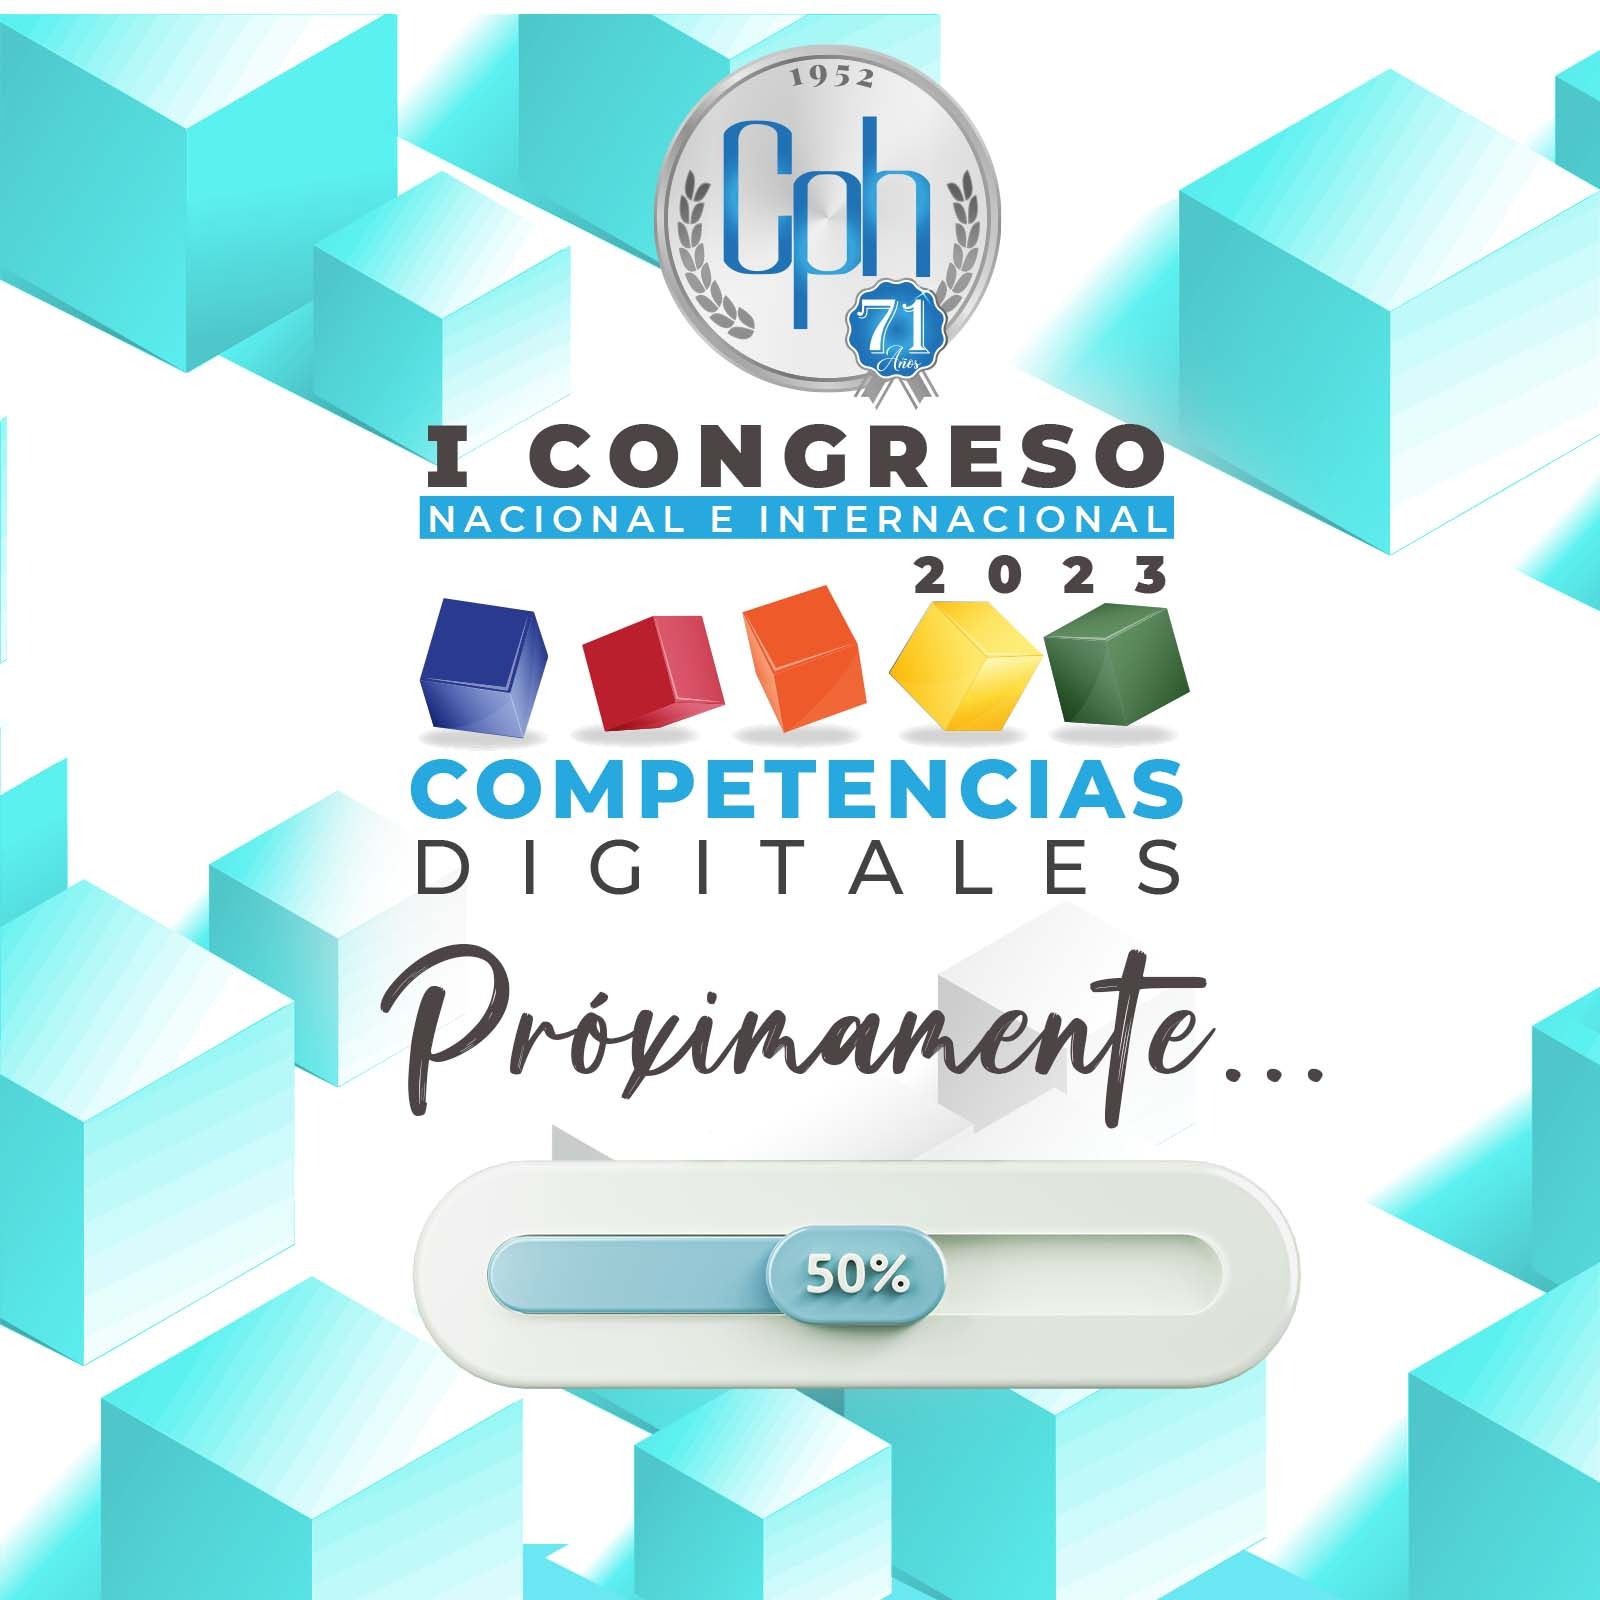 I congreso nacional e internacional 2023 competencias digitales.